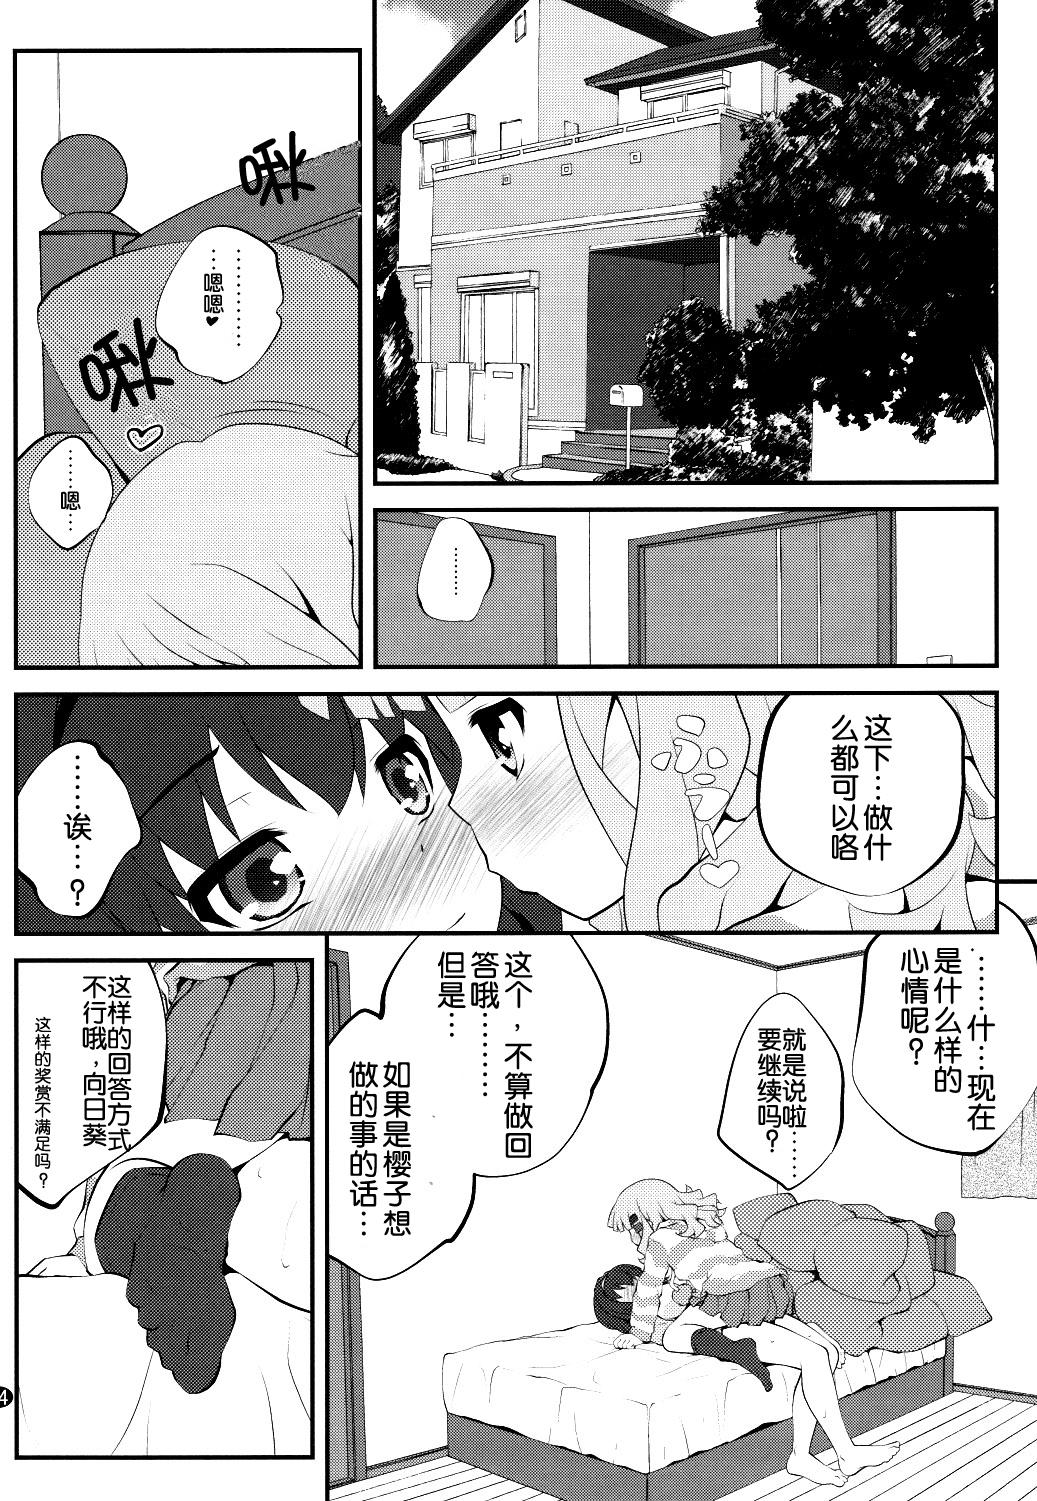 Foda Himegoto Flowers 7 - Yuruyuri Feet - Page 4